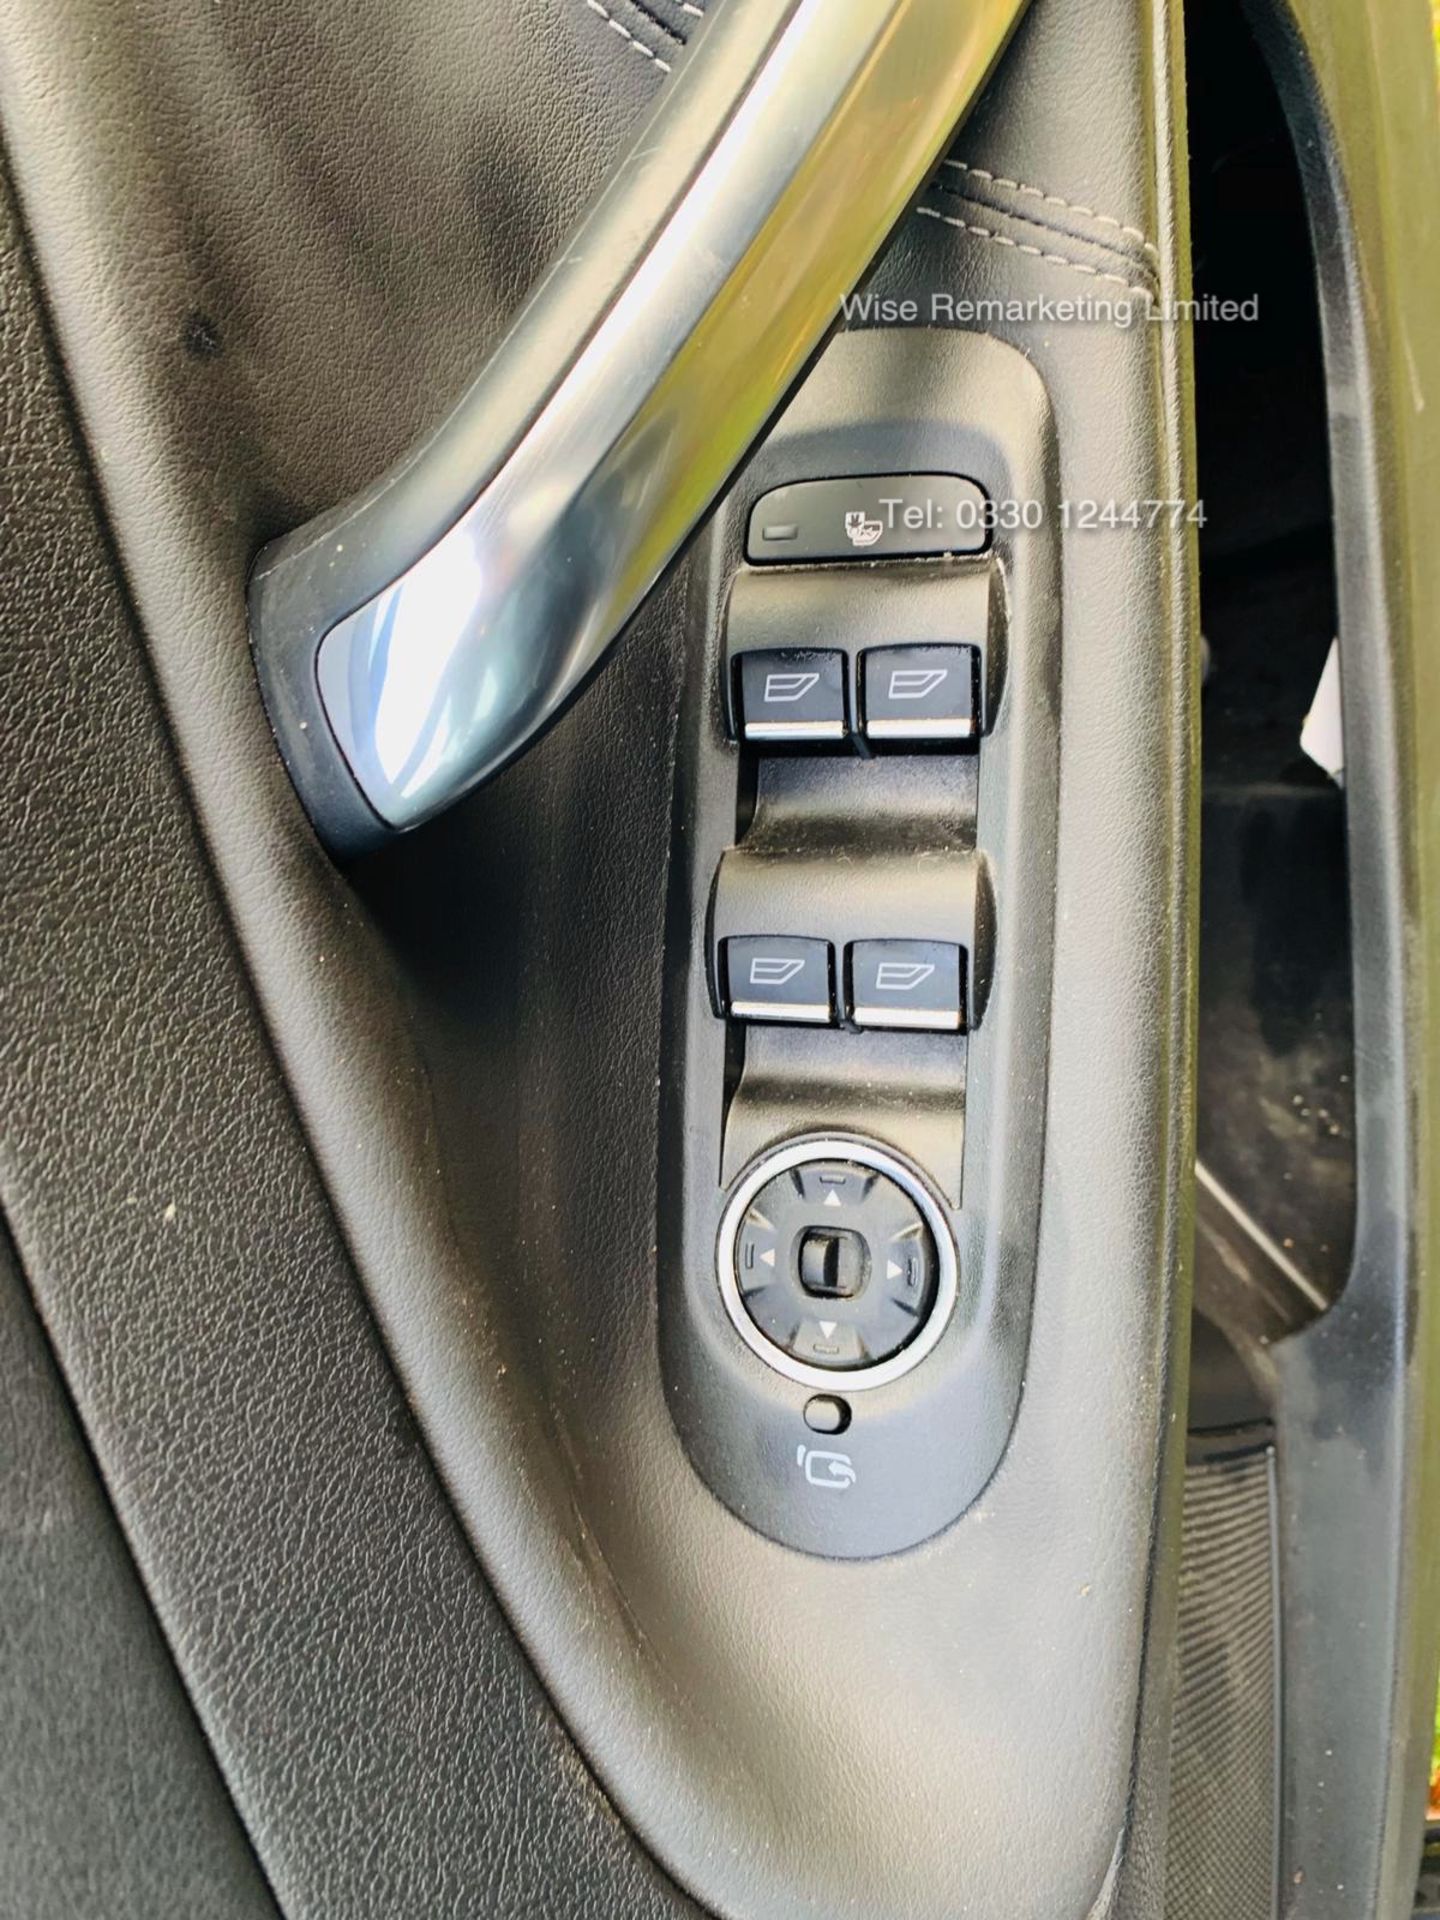 Ford Mondeo Titanium X 2.0 TDCi - 2014 14 Reg - Full Leather - Sat Nav - Top Spec - Image 24 of 25